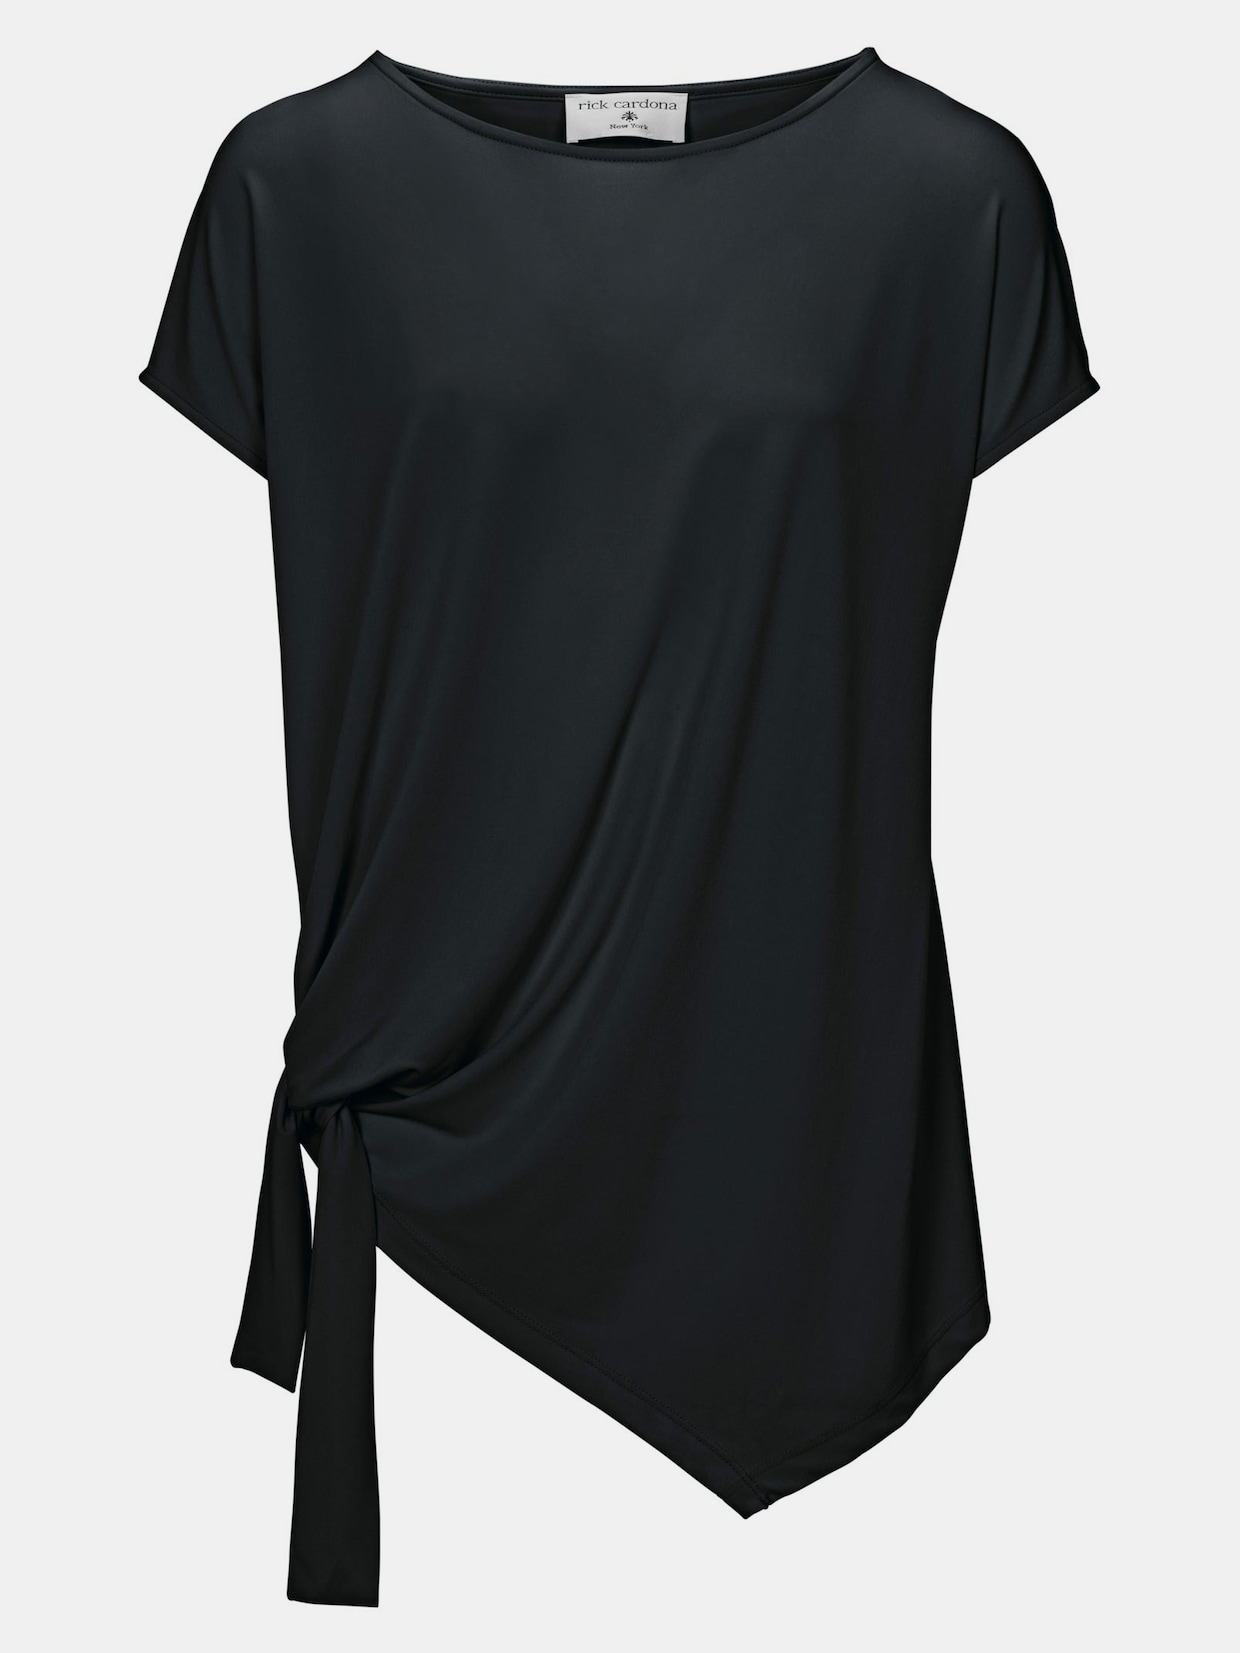 Ashley Brooke Shirts met ronde hals - zwart